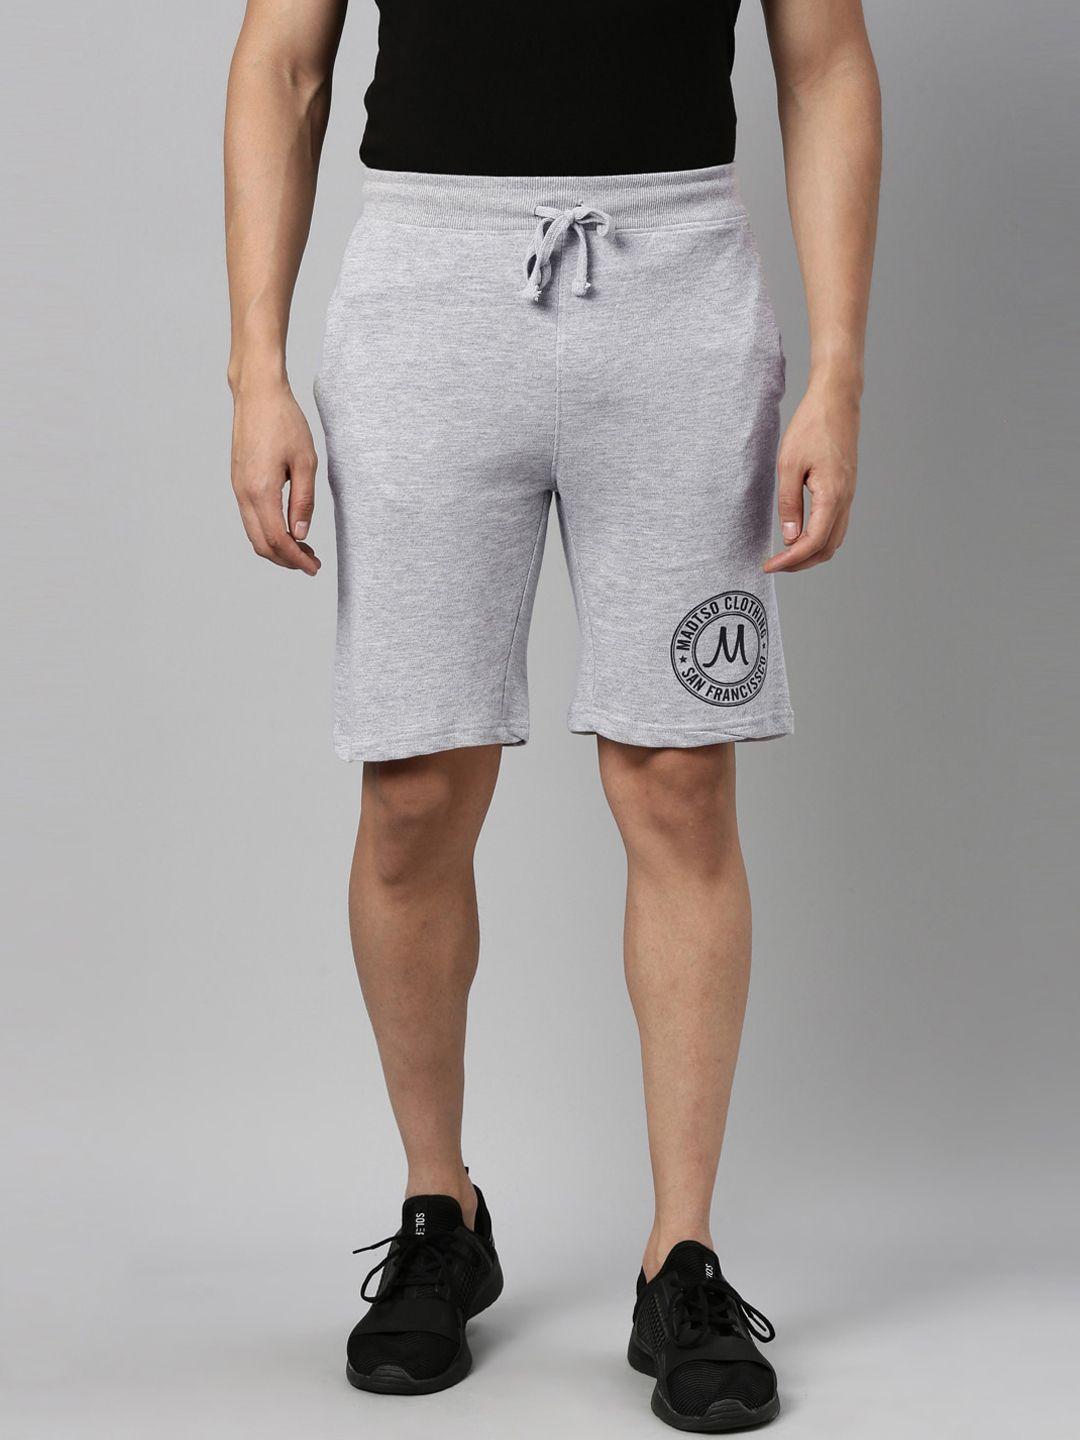 madsto men grey mid-rise sports shorts